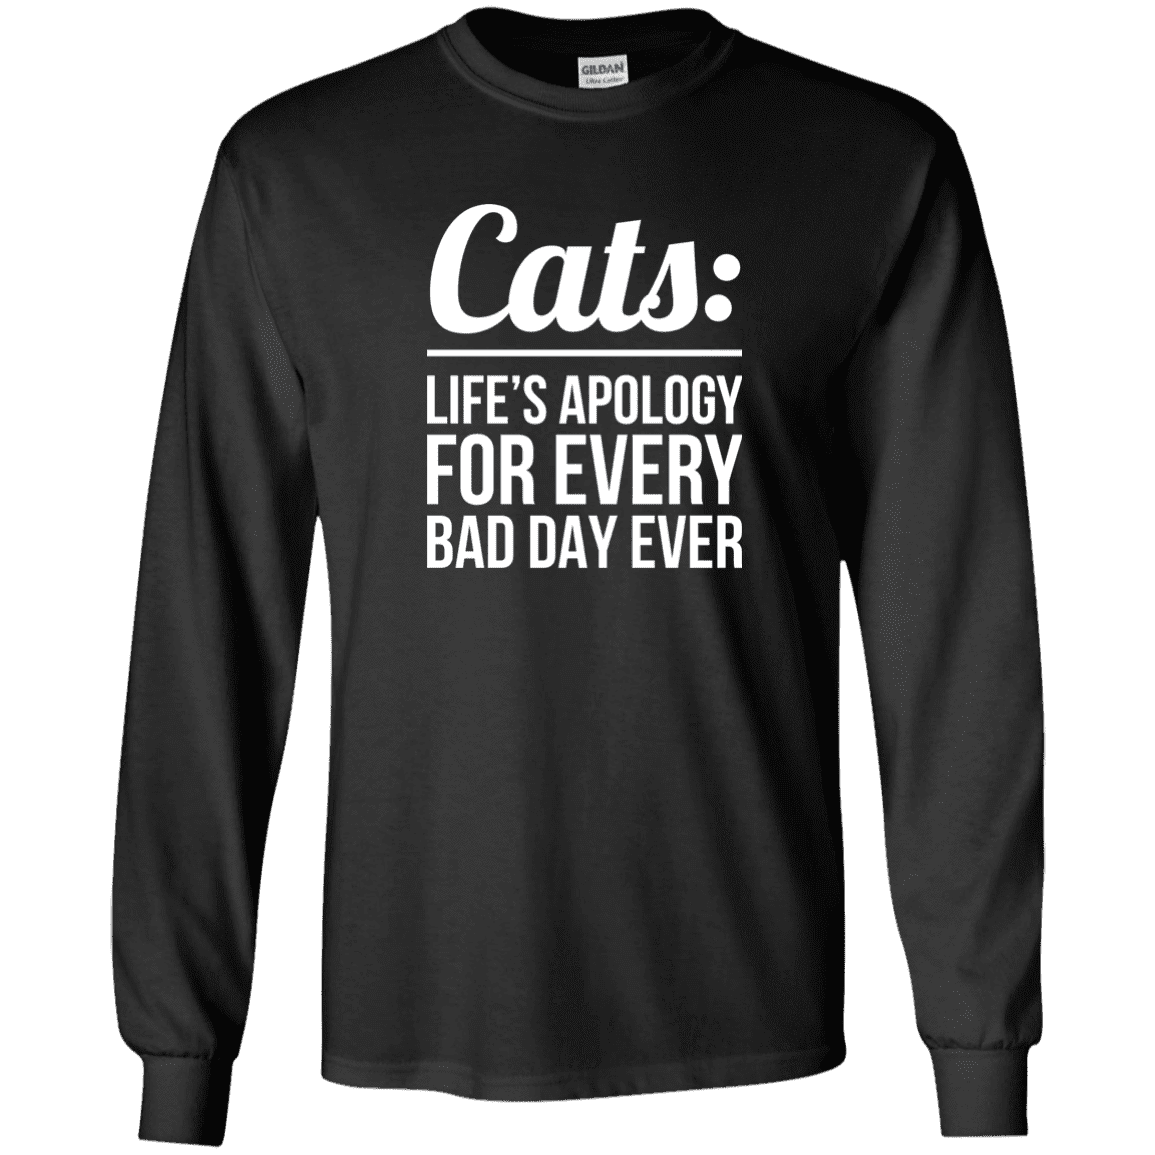 Cats Life's Apology - Long Sleeve T Shirt.